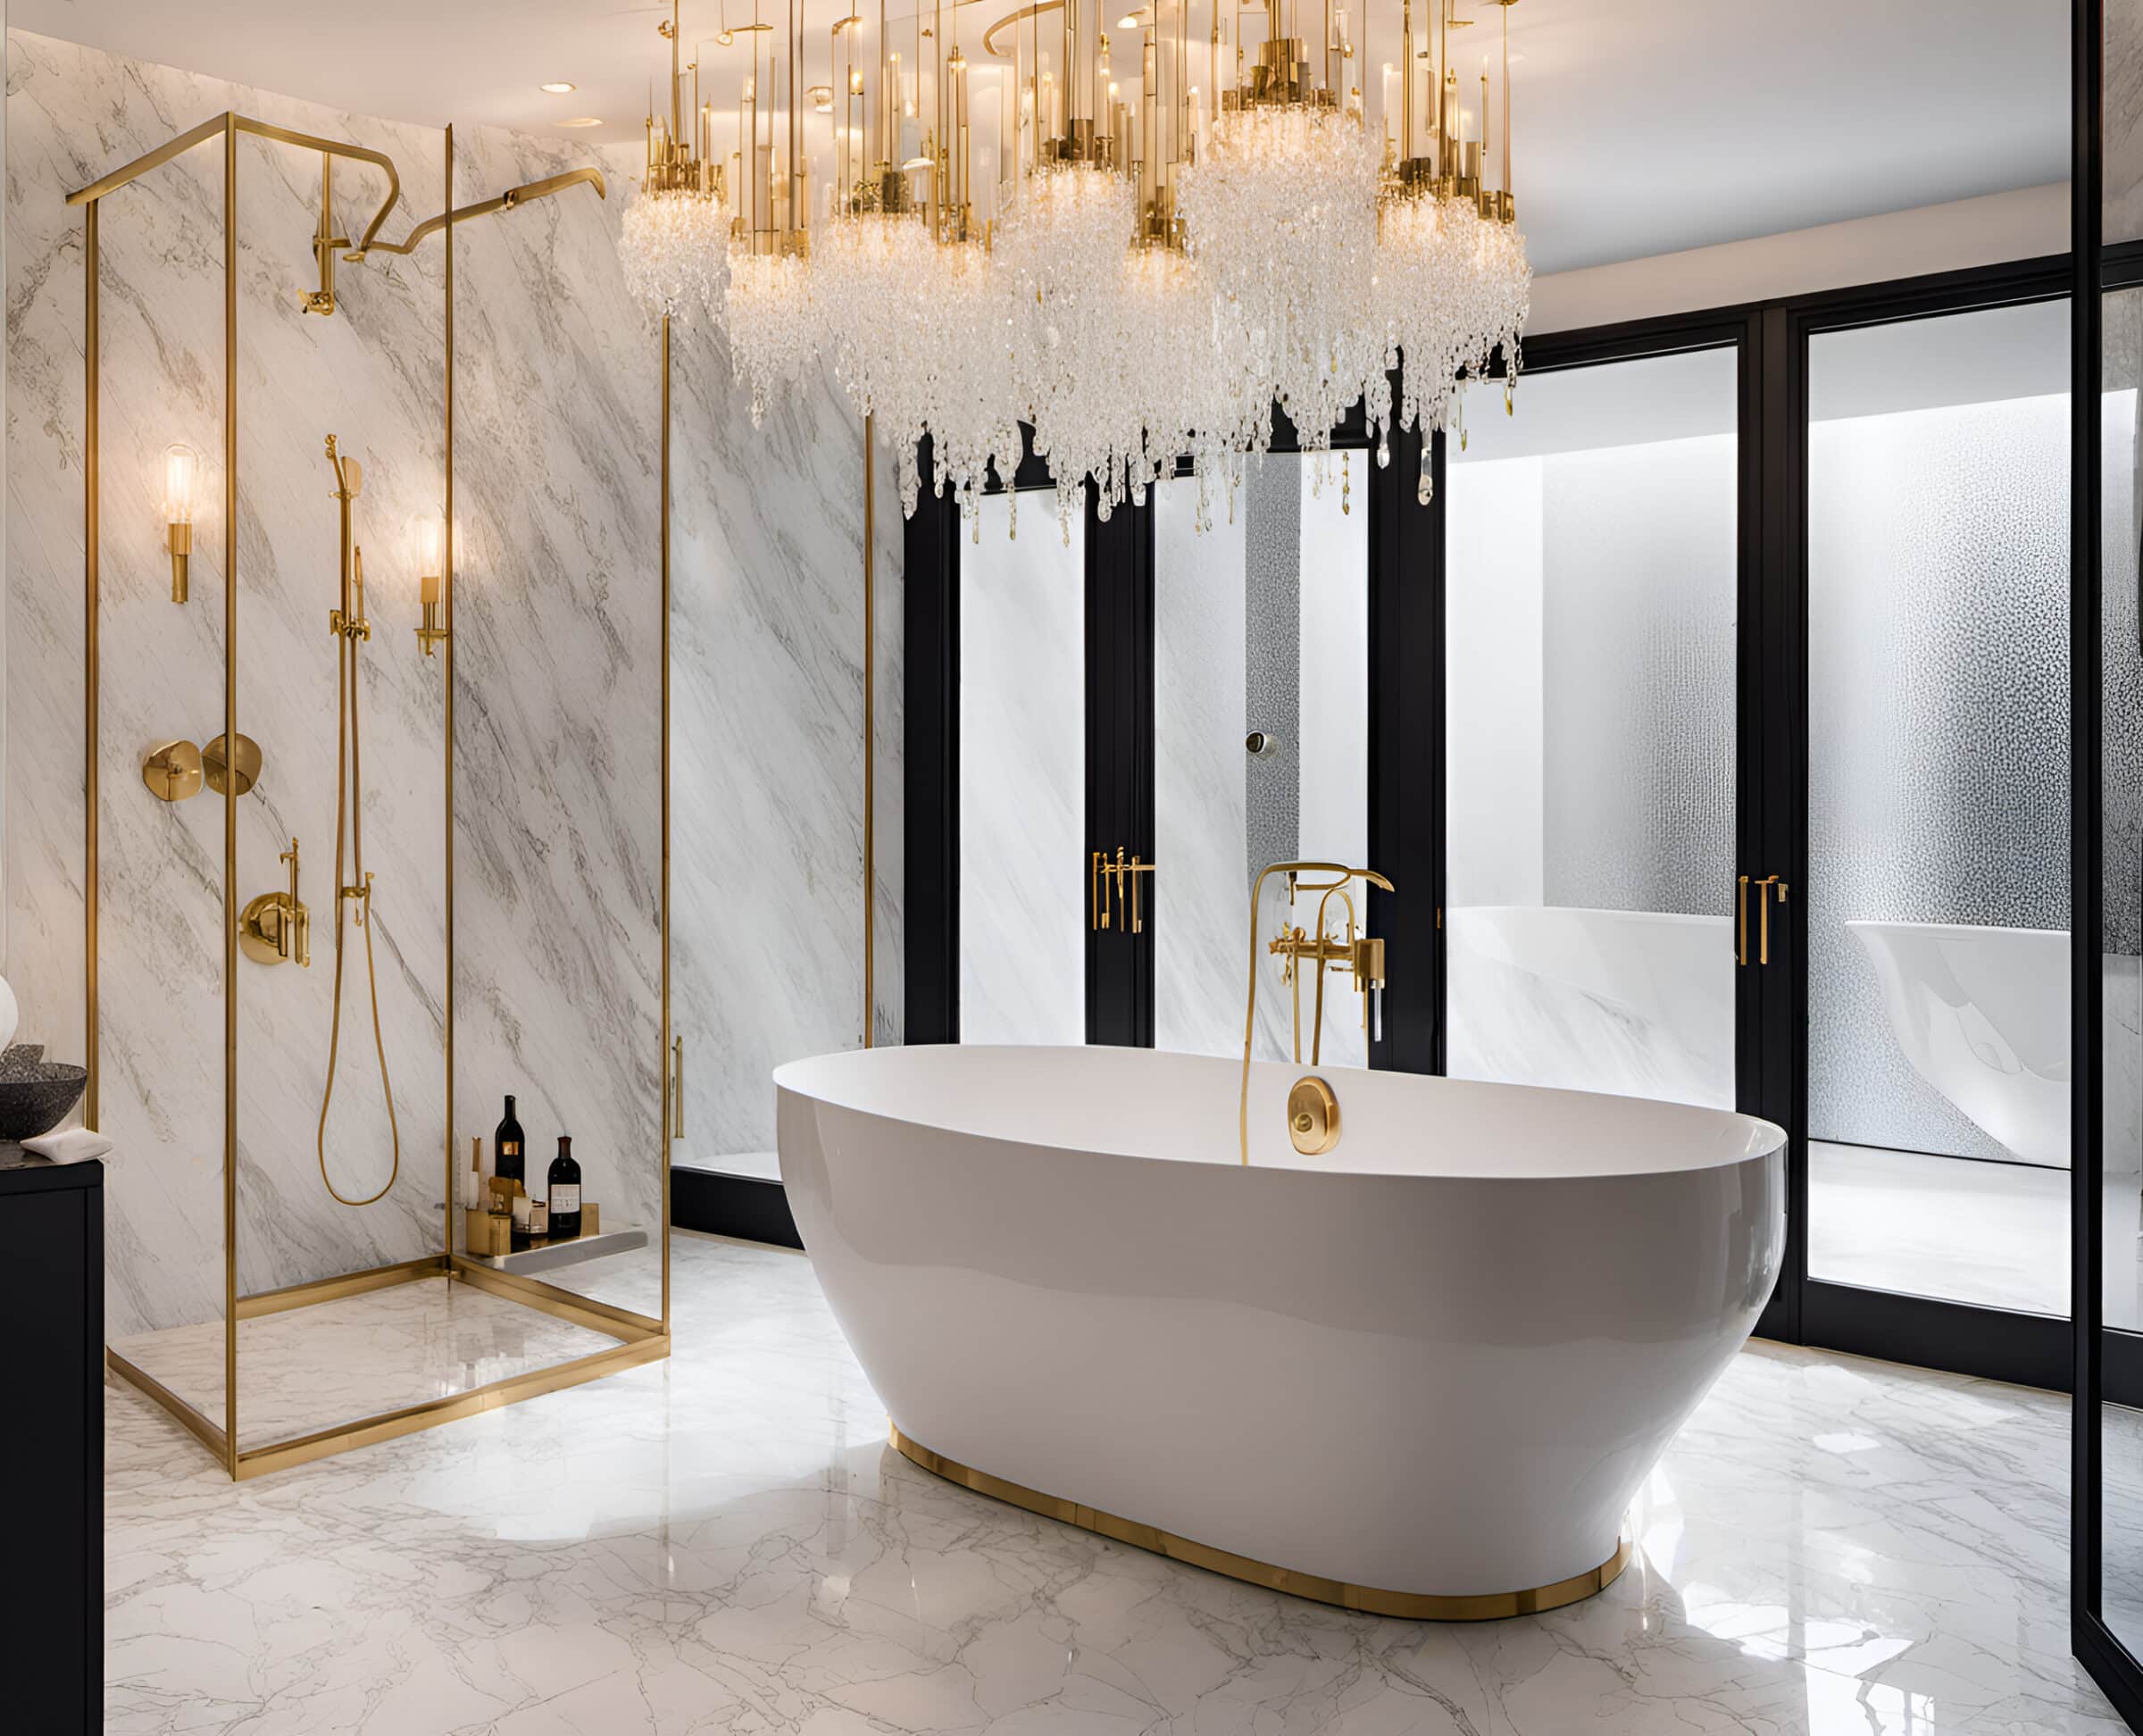 Luxurious bathroom with freestanding bathtub, rain shower, heated flooring and marble tiles